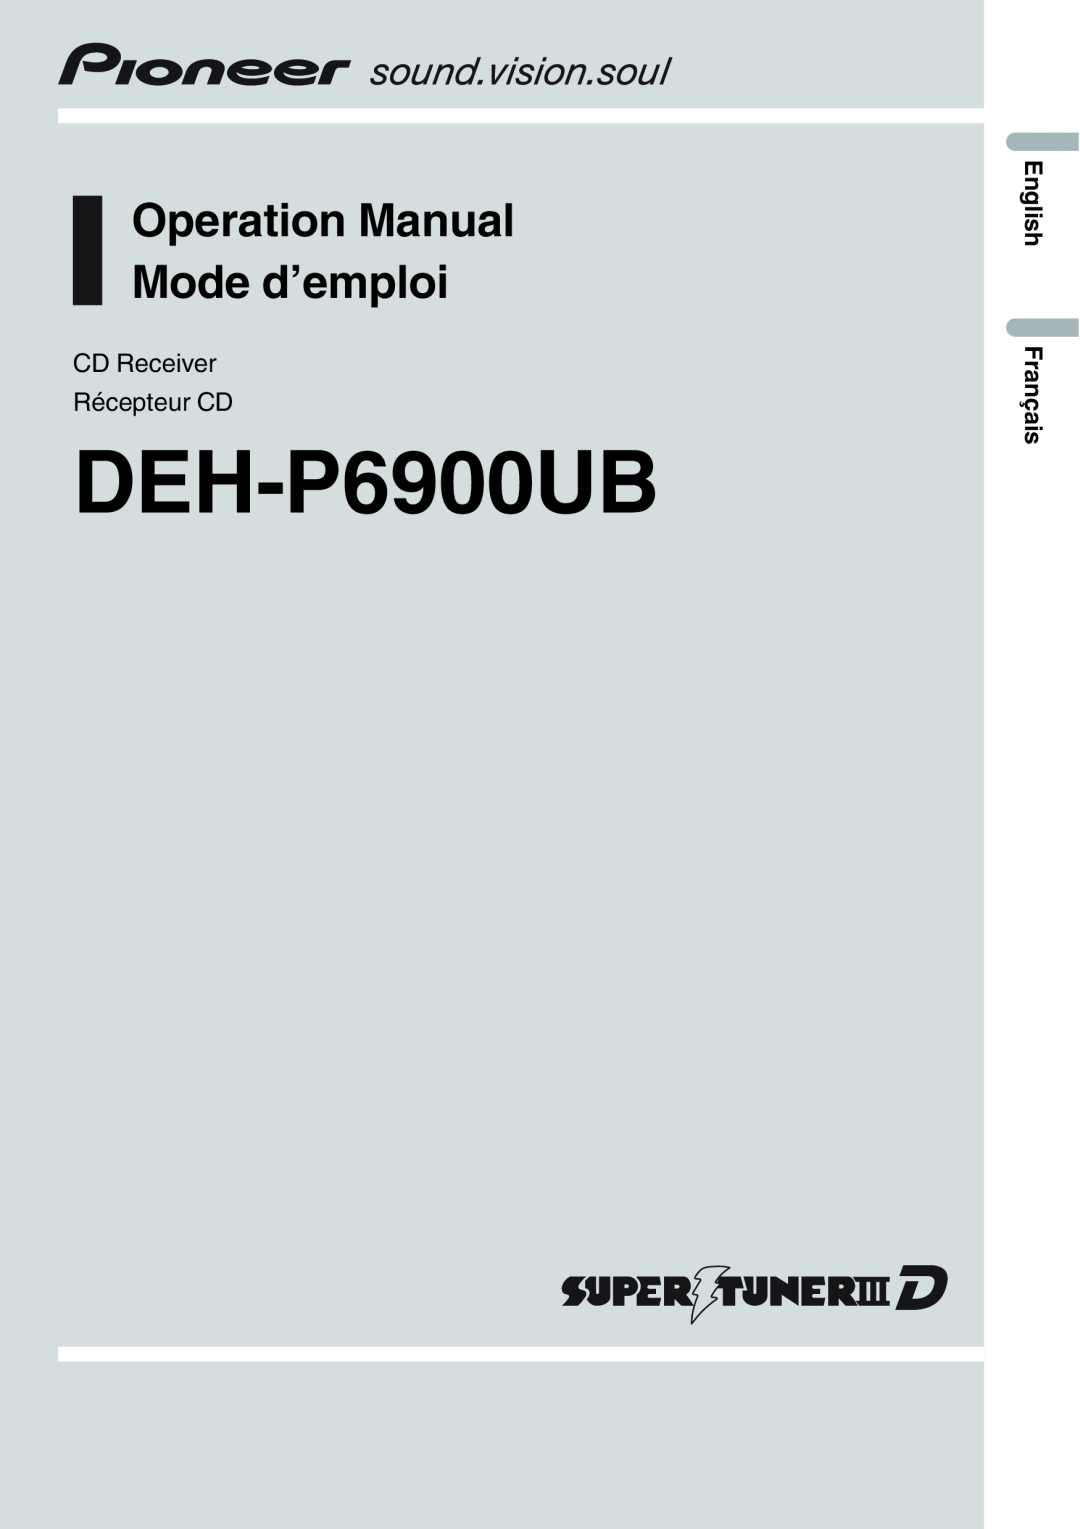 Pioneer DEH-P6900UB operation manual CD Receiver Récepteur CD, English Français, Operation Manual Mode d’emploi 